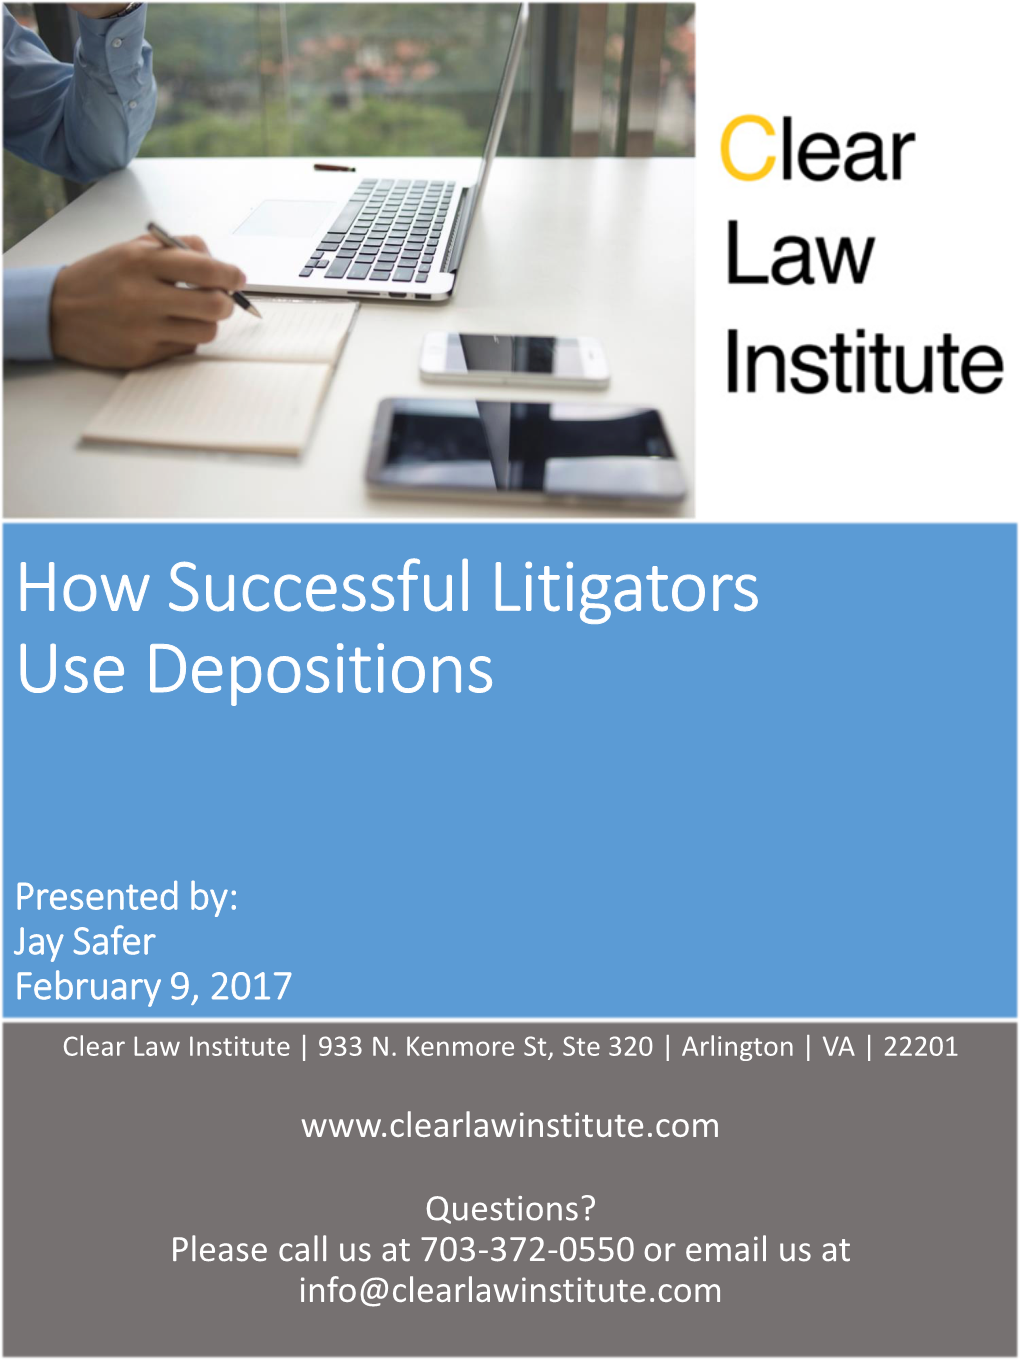 How Successful Litigators Use Depositions